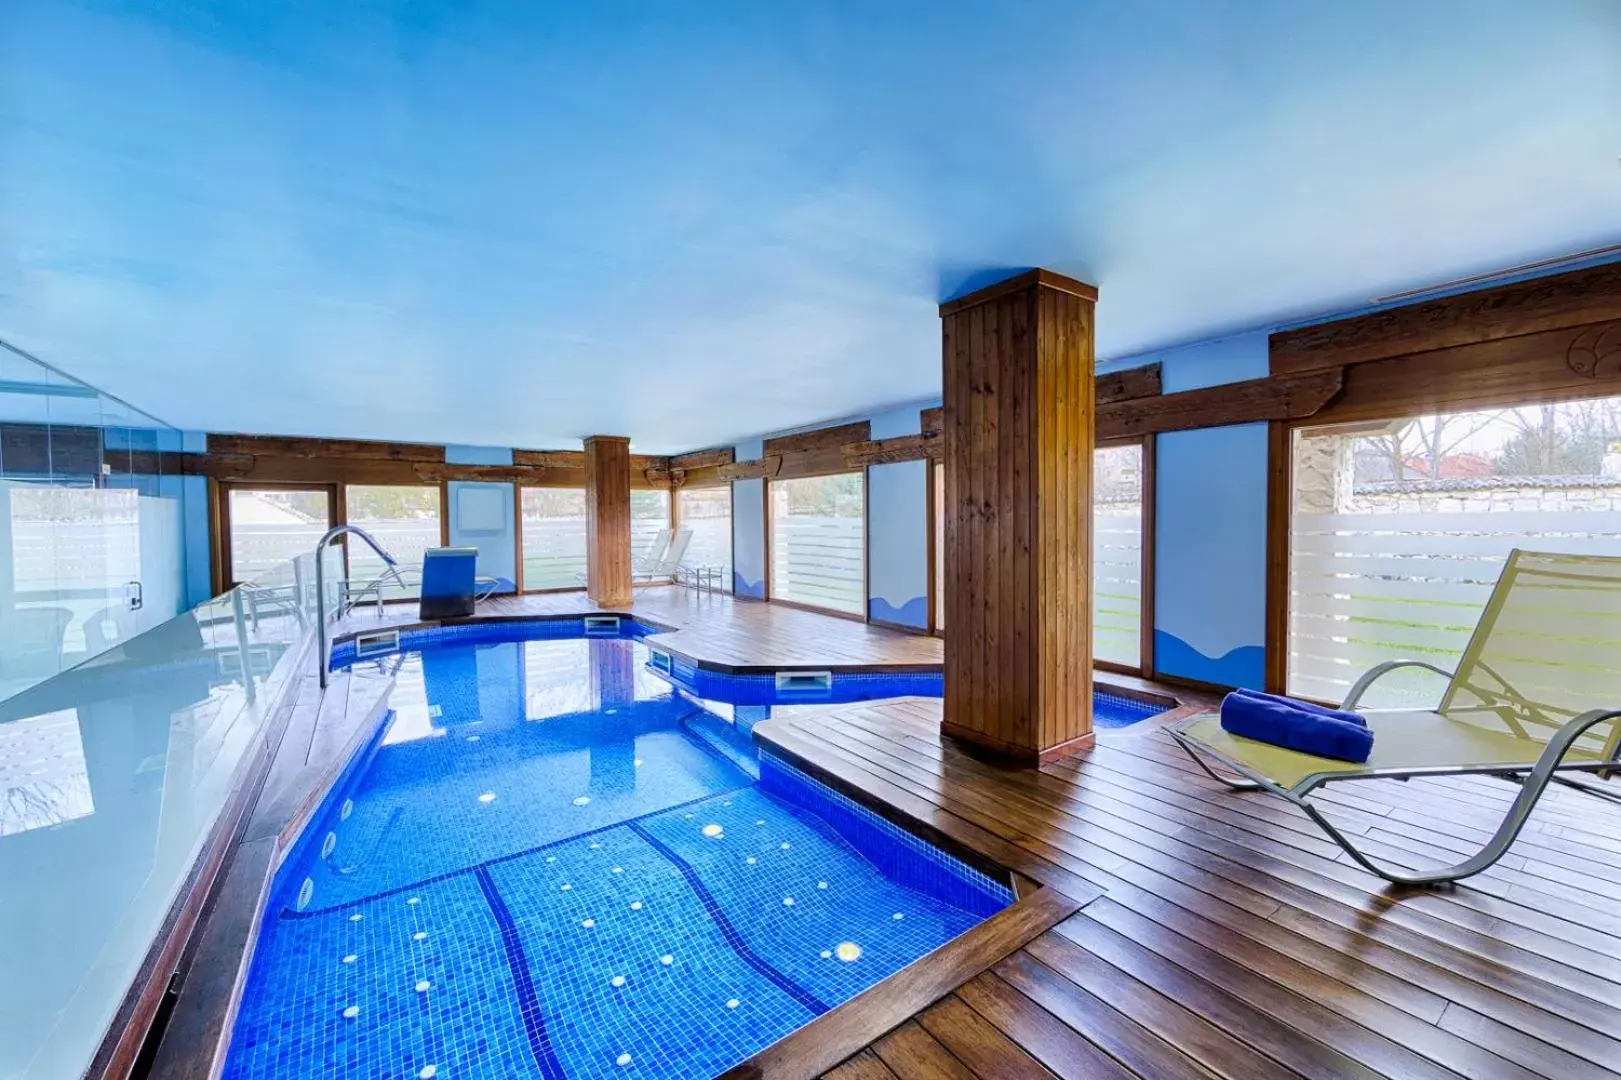 Hot Tub, Swimming Pool in AZZ Peñafiel Las Claras Hotel & Spa